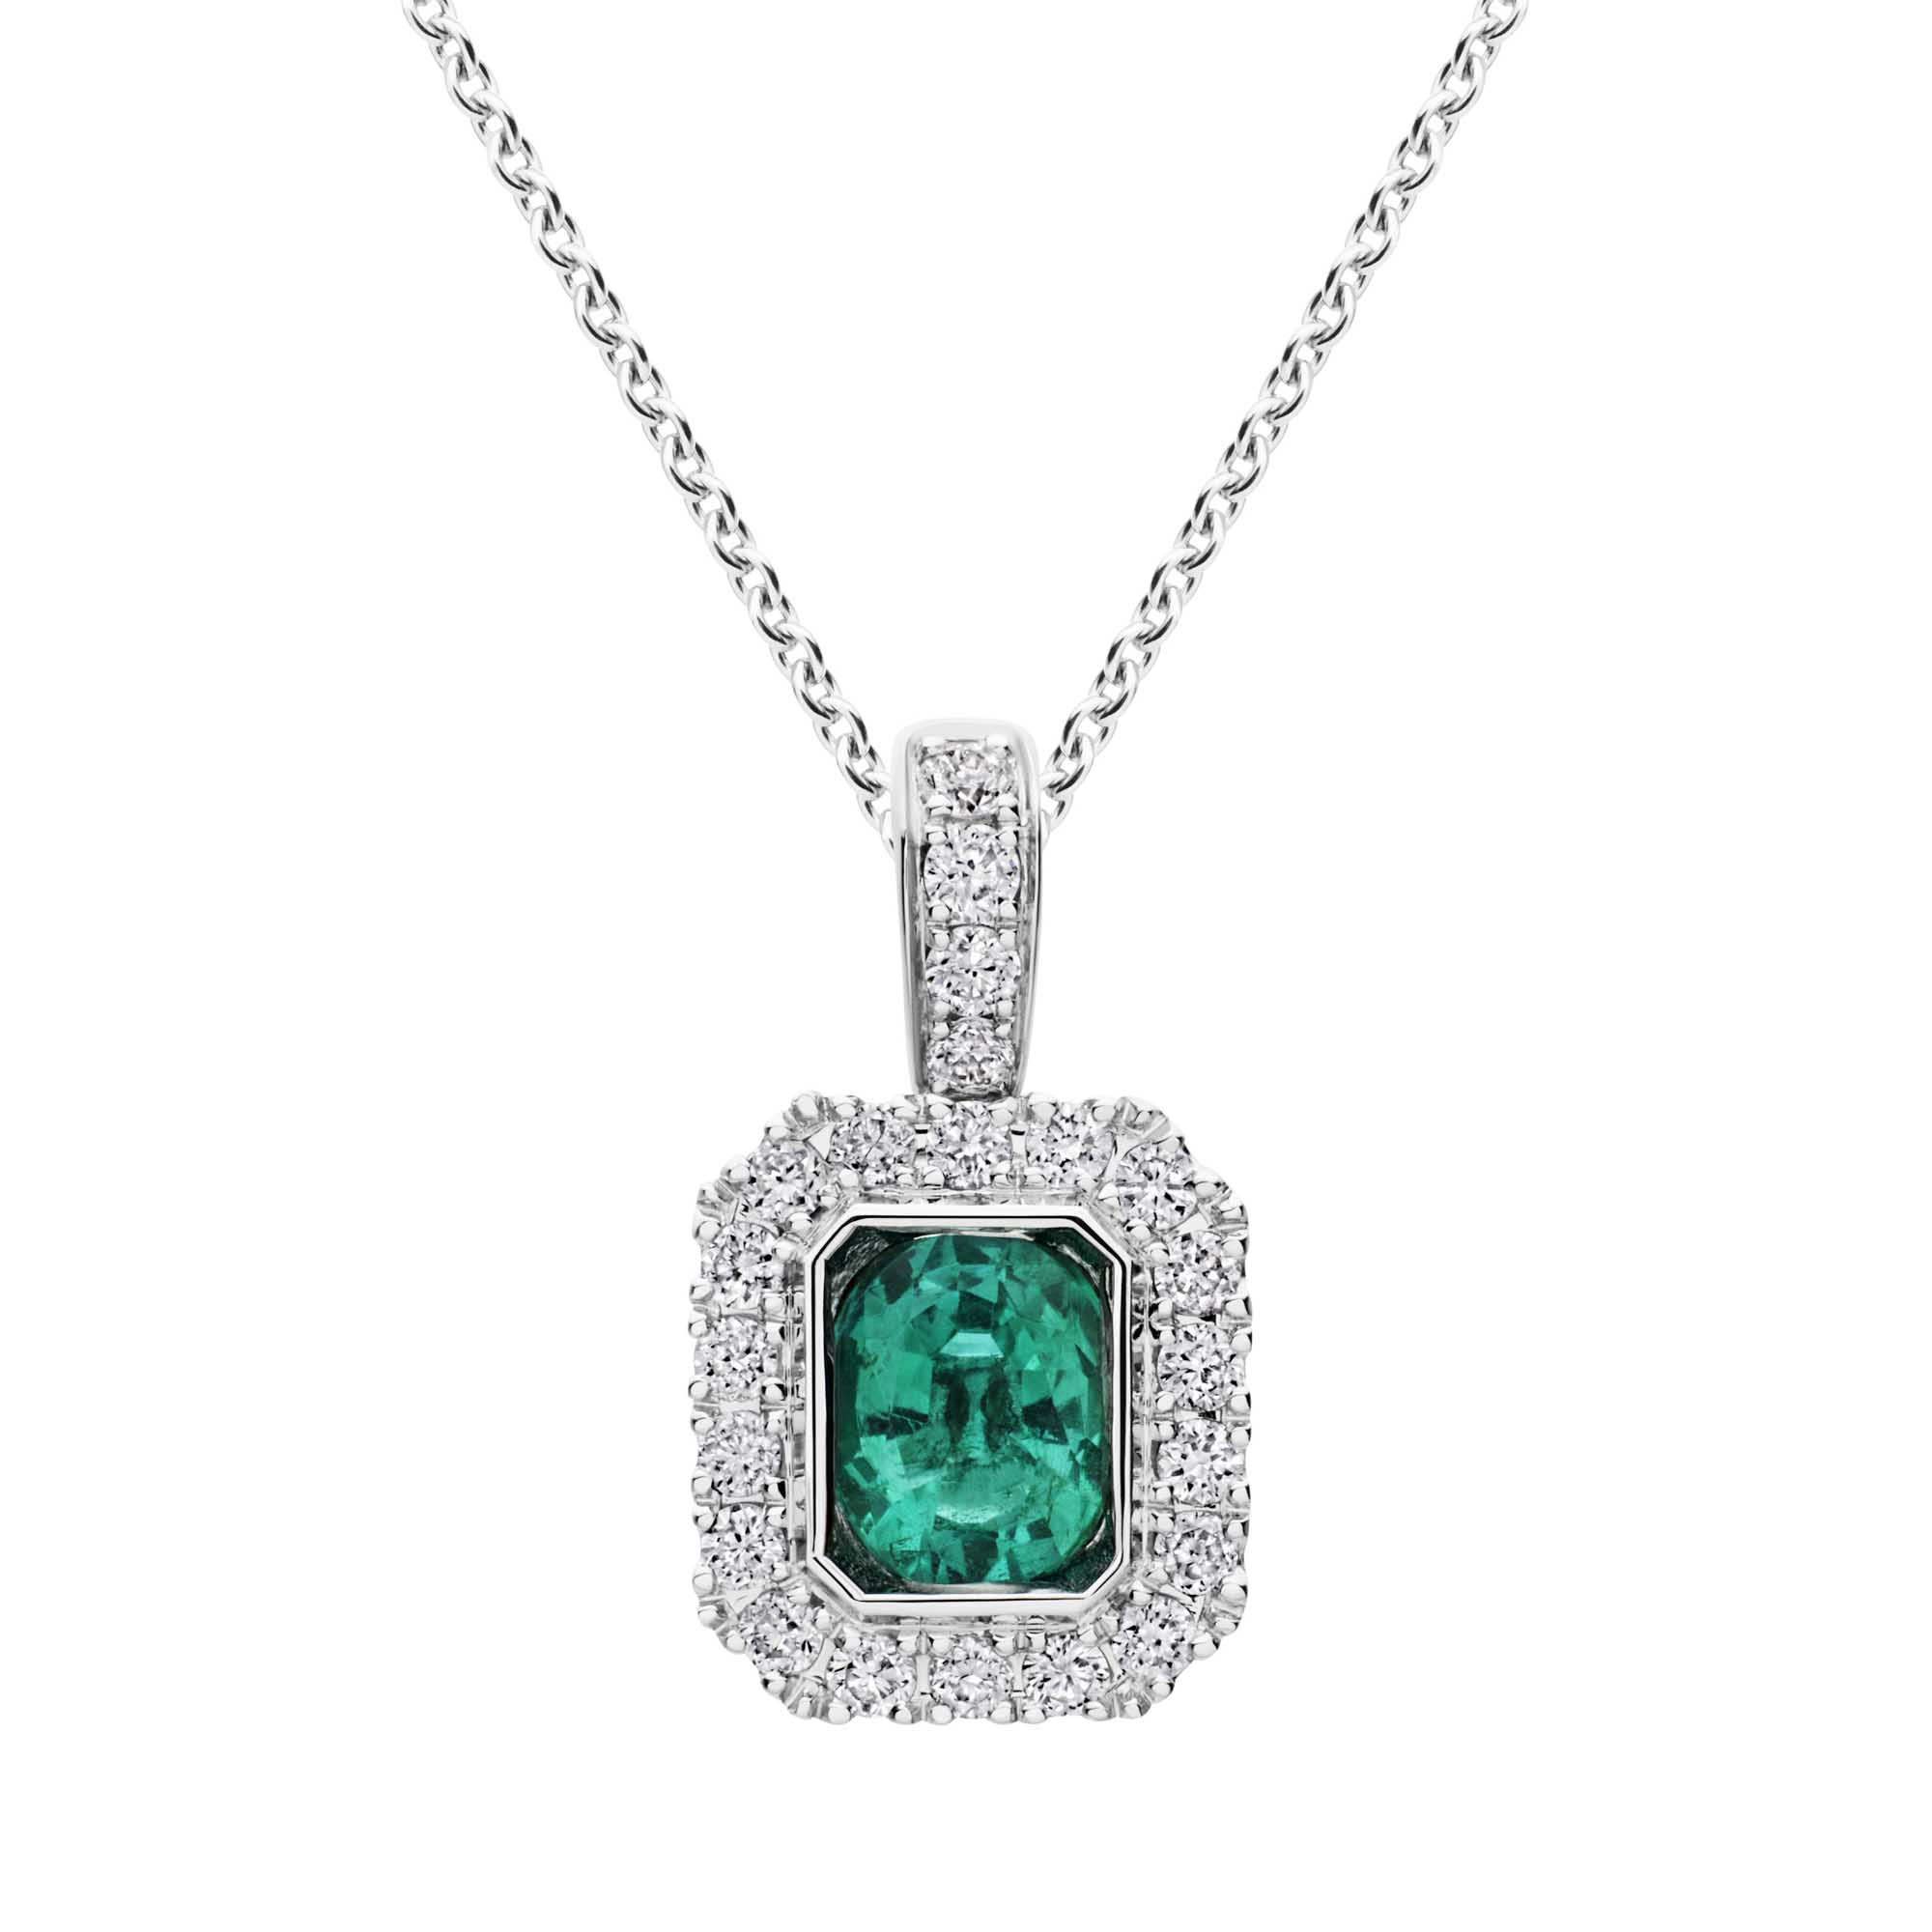 Divine Emerald and Diamond Necklace | Perth Mint Jewellery Store